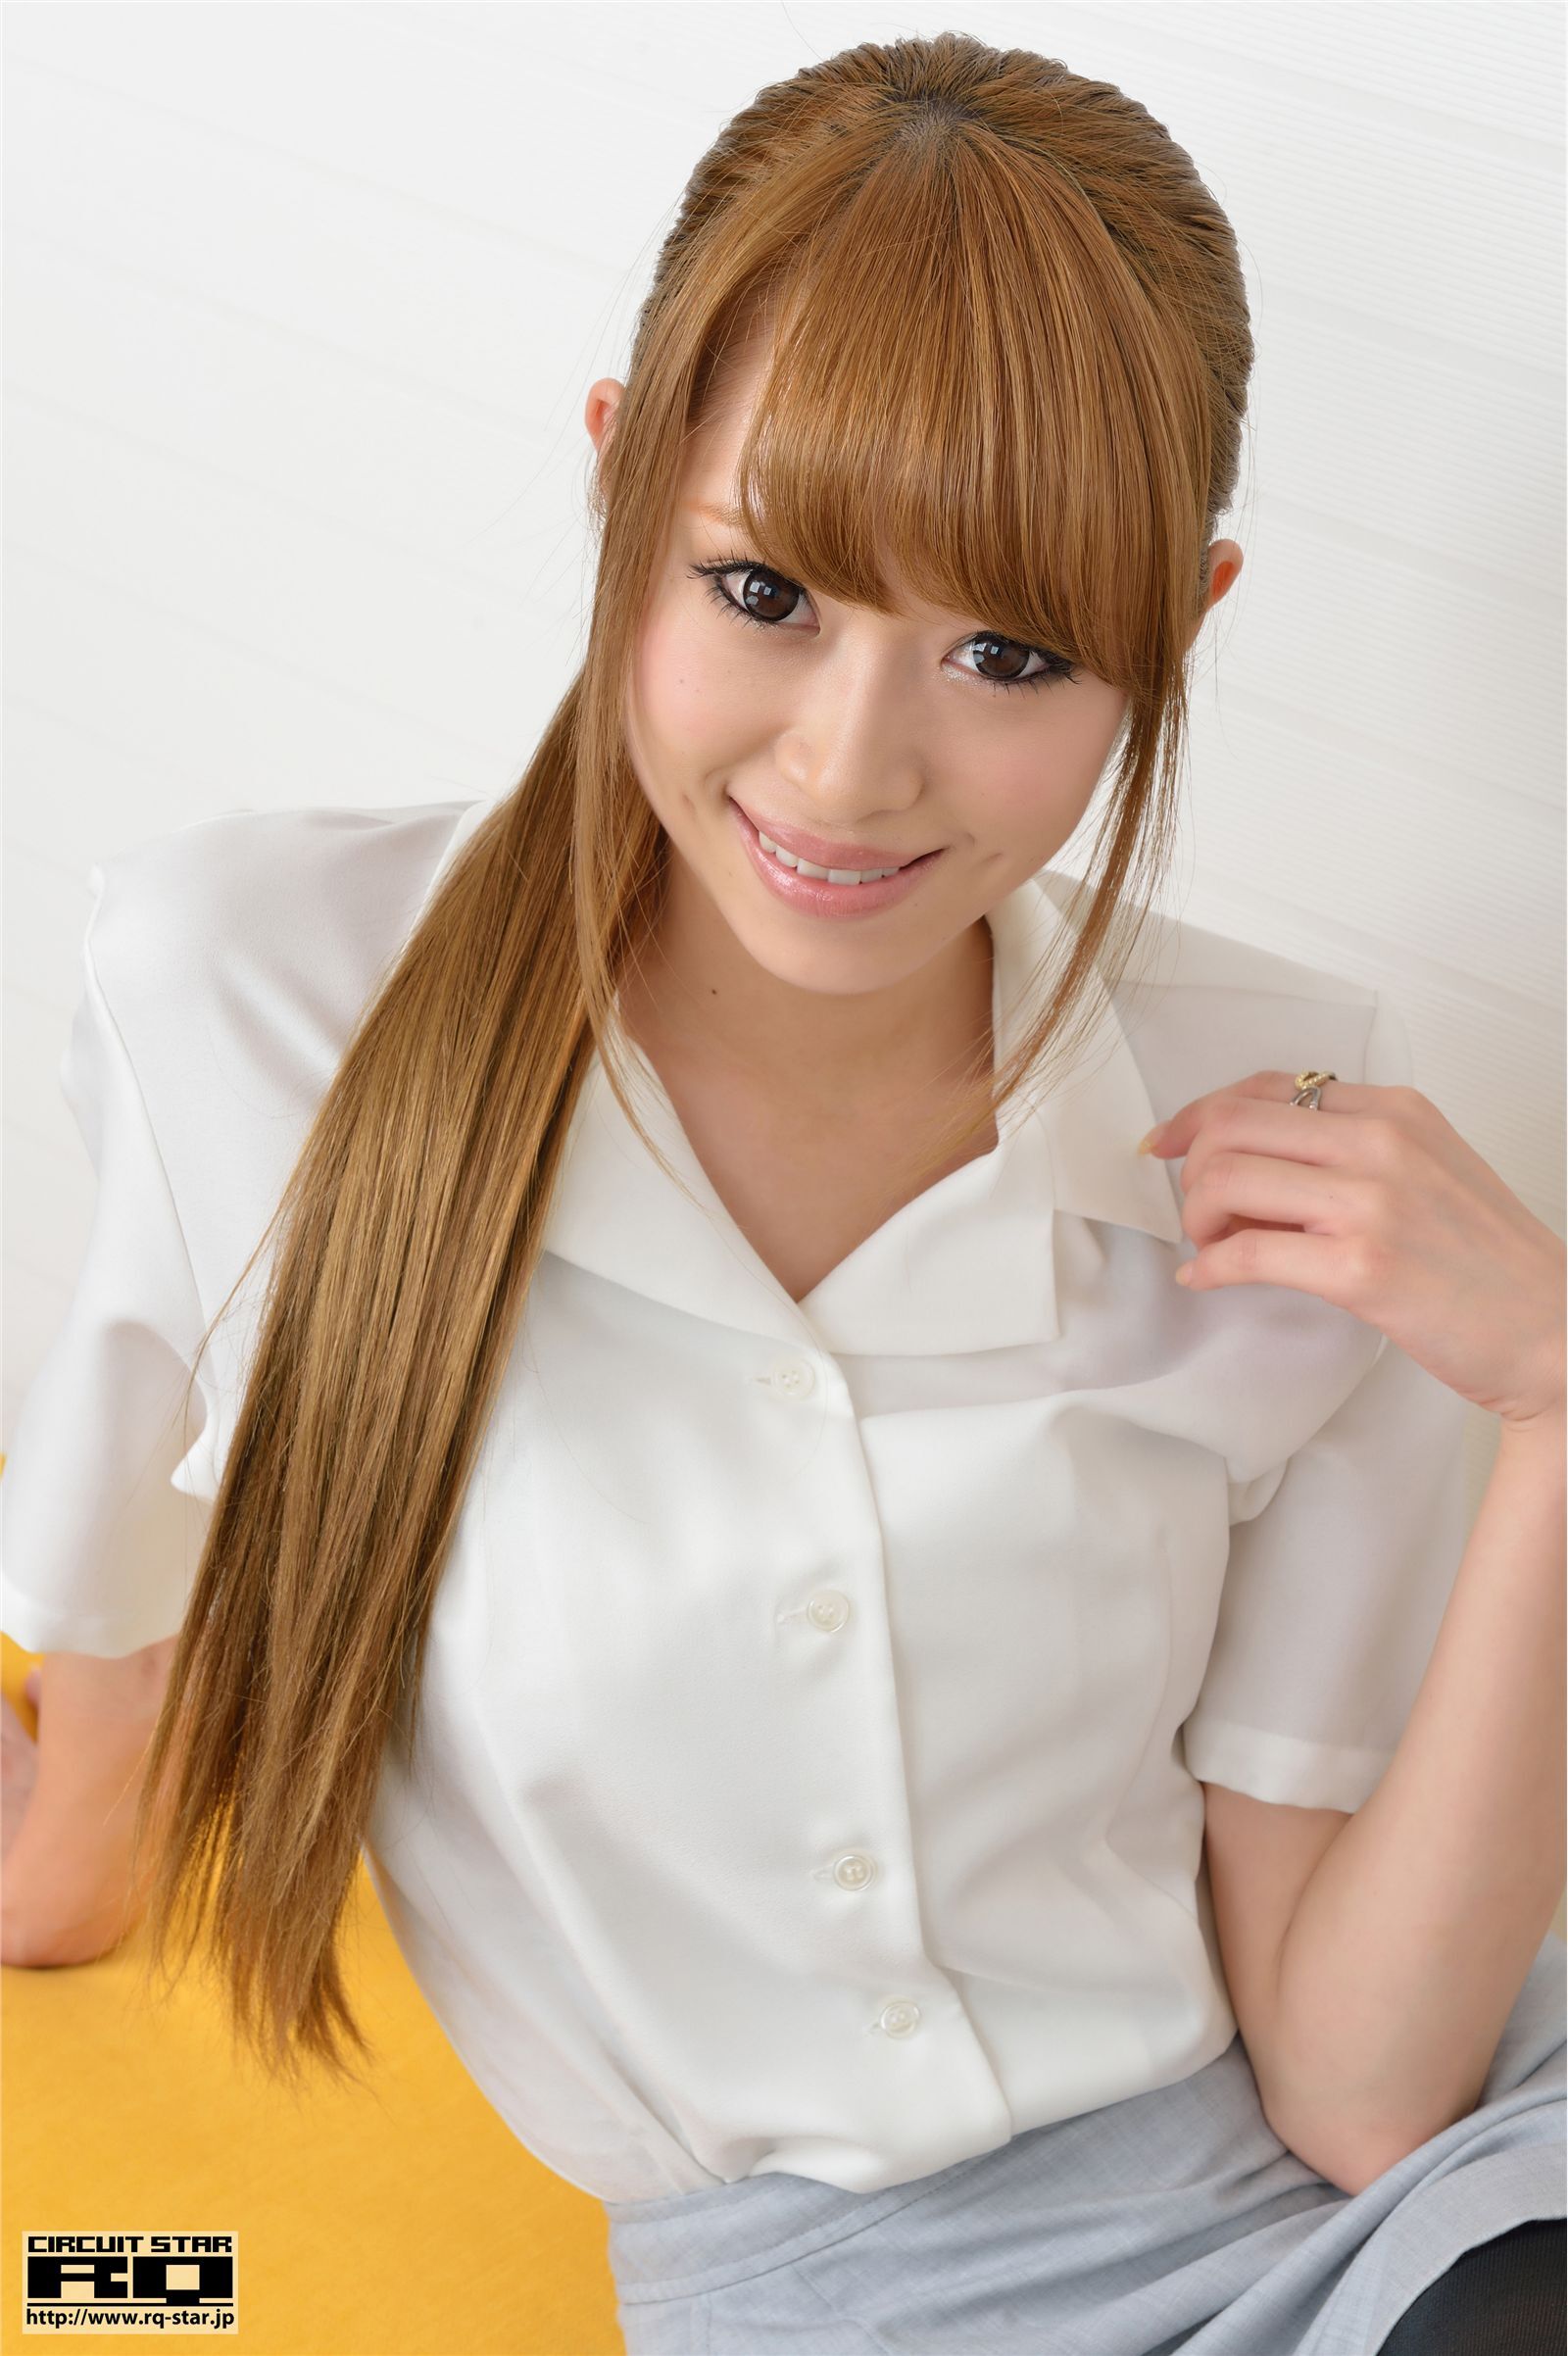 [RQ star] [08-27] no.00678 Japan uniform beauty